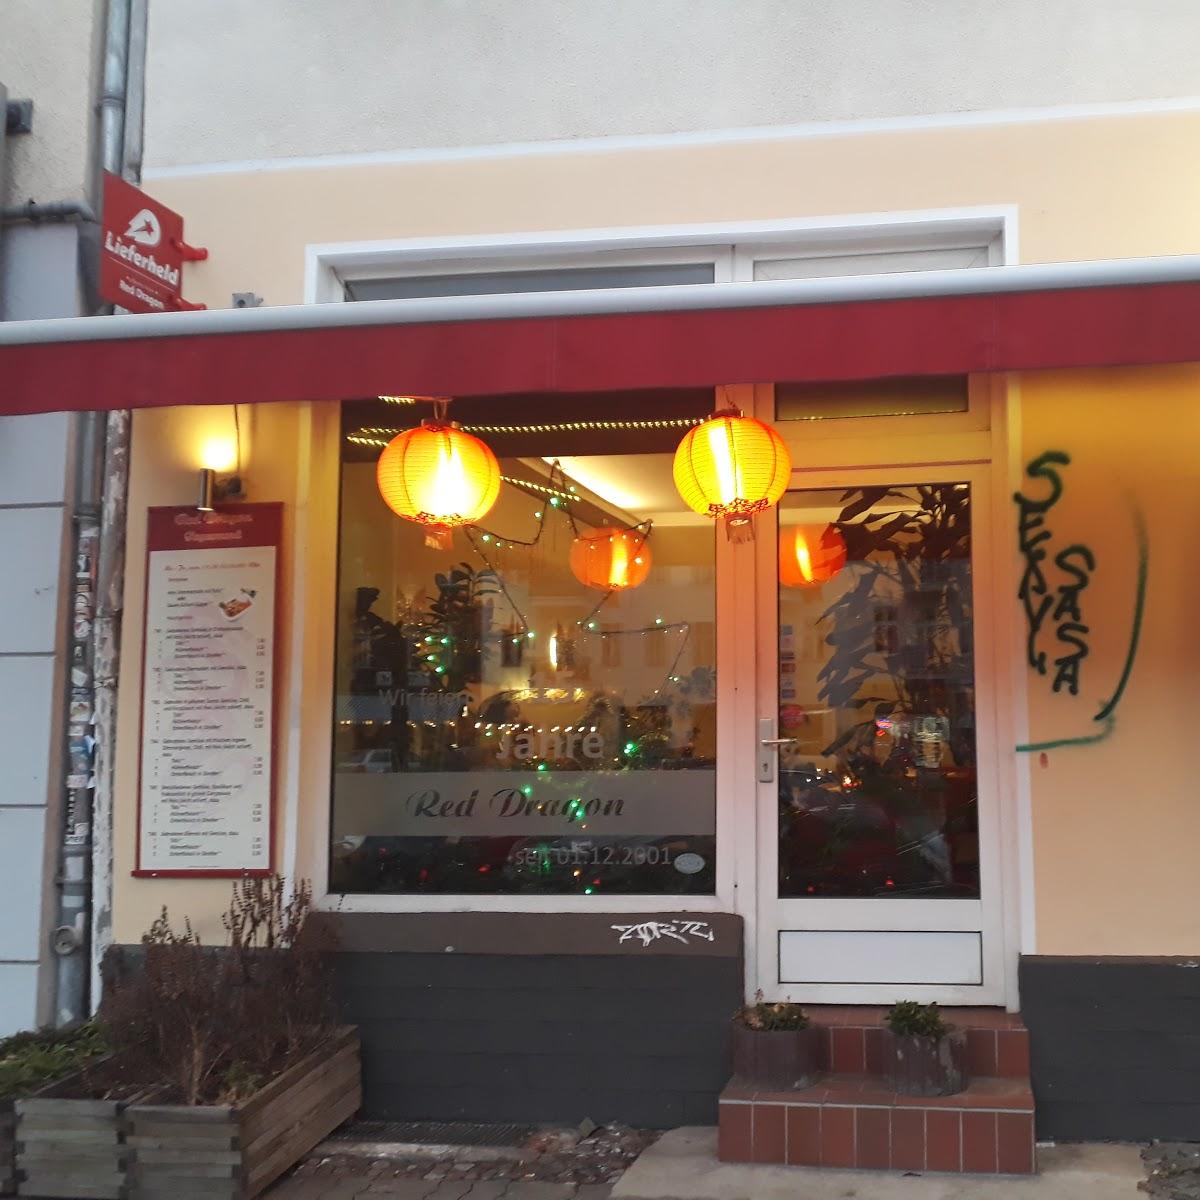 Restaurant "Red Dragon" in Berlin